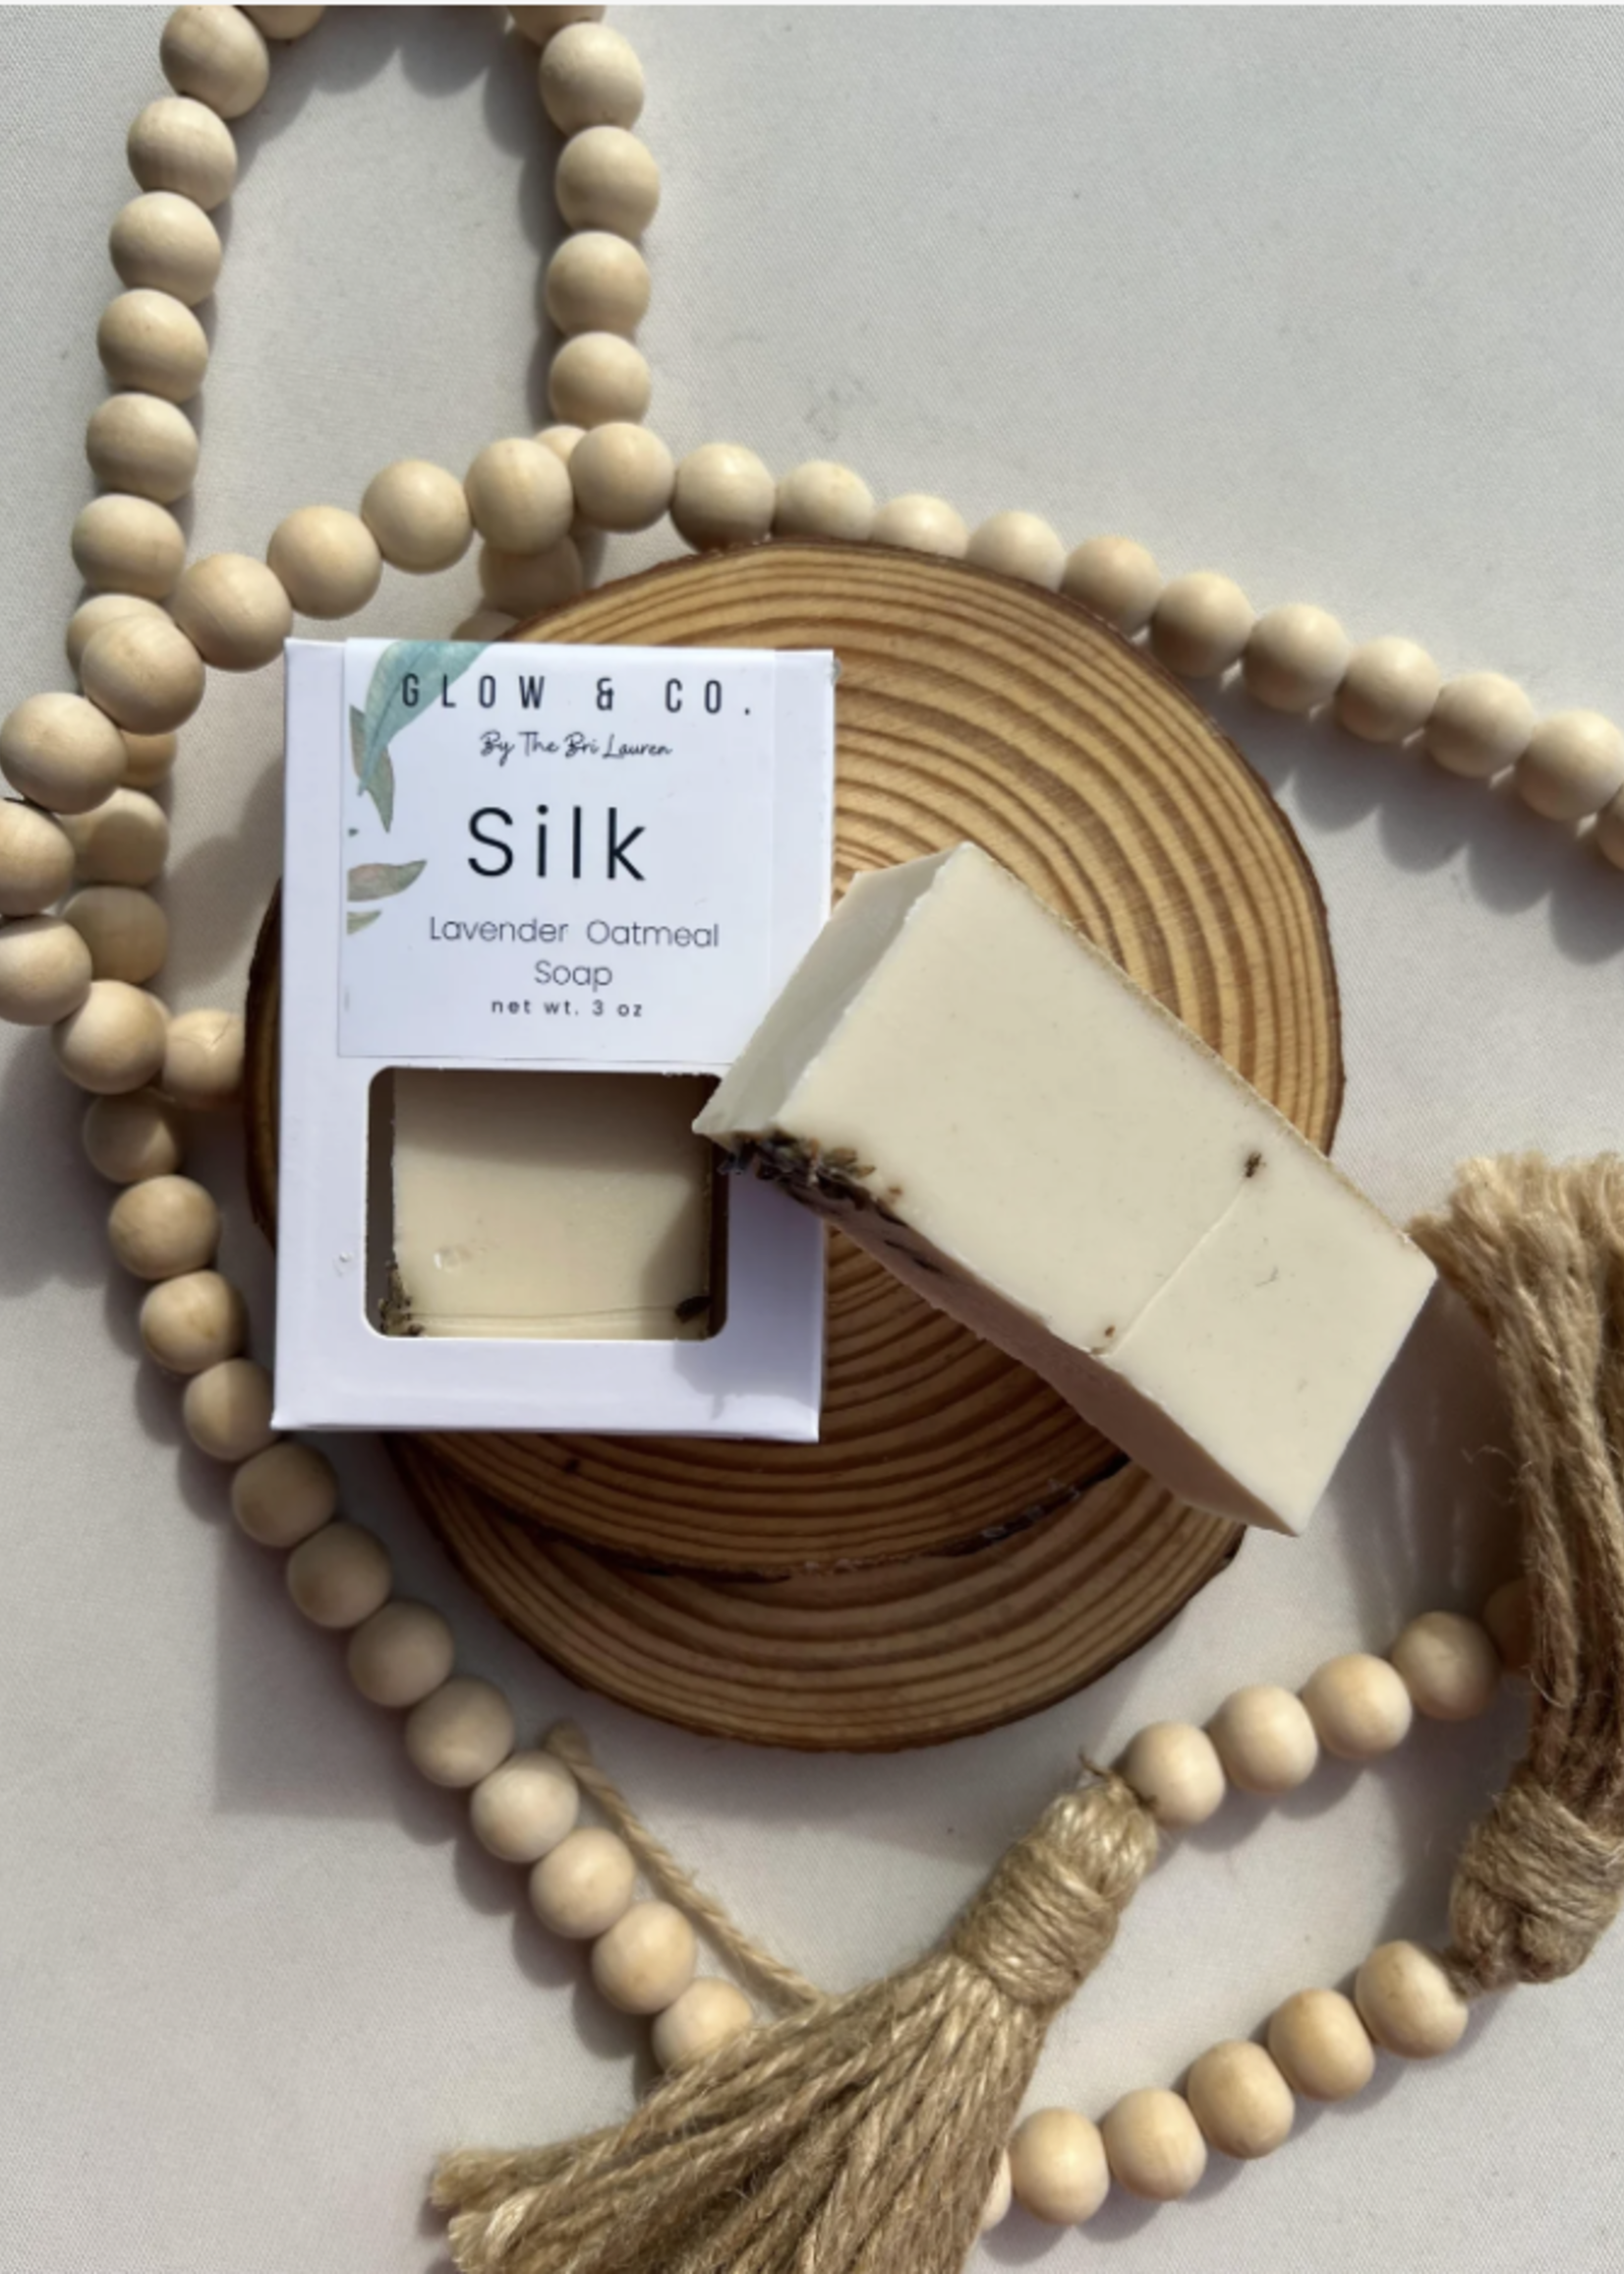 Silk Soap